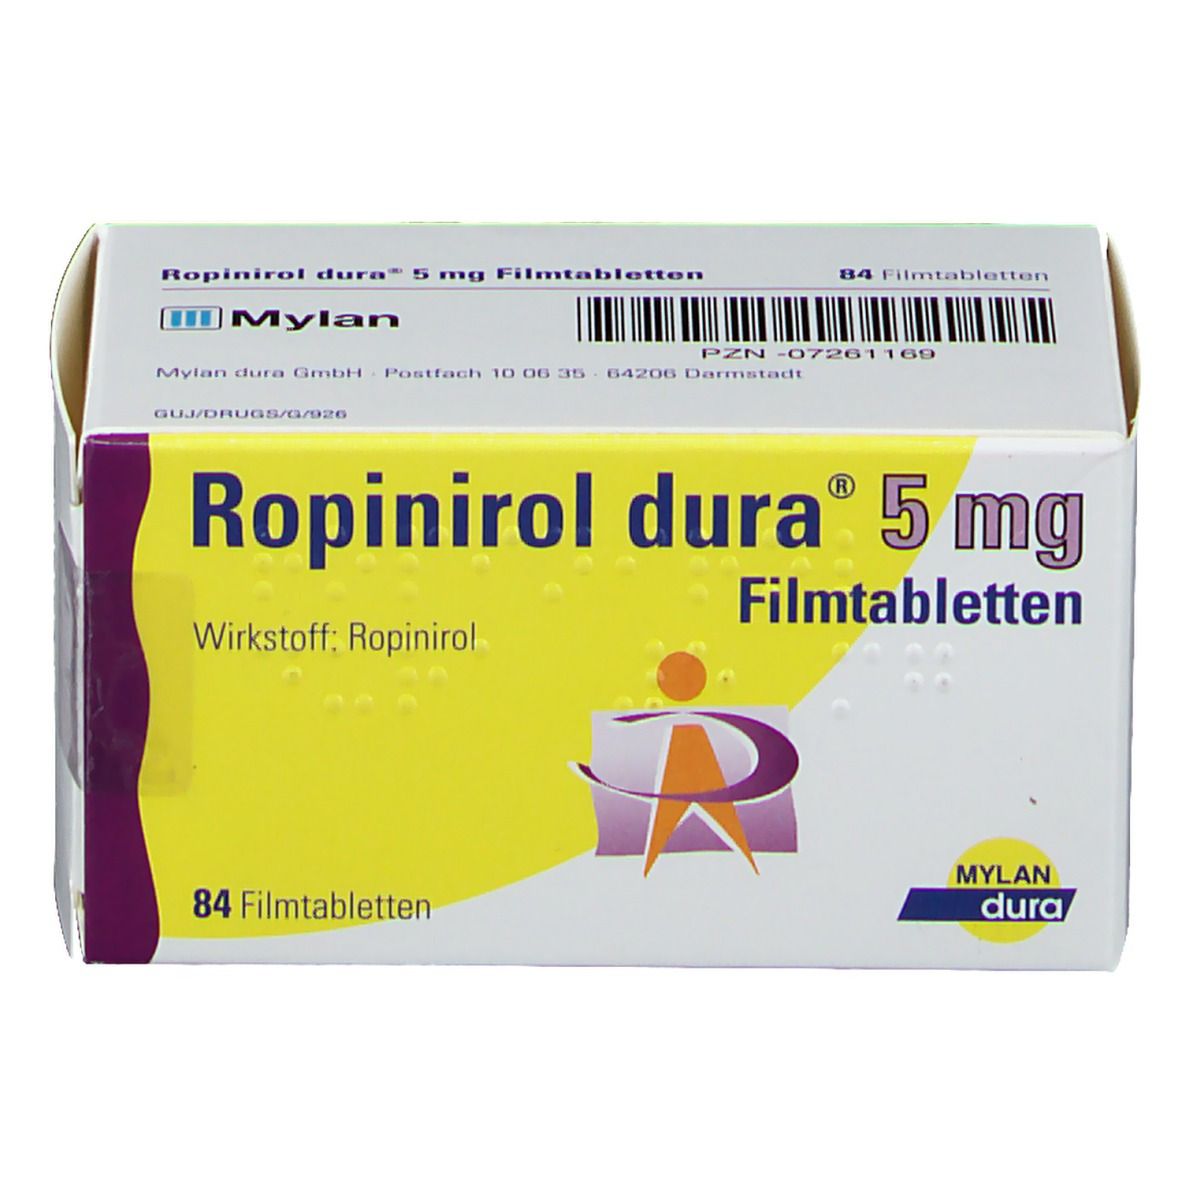 Ropinirol dura® 5 mg